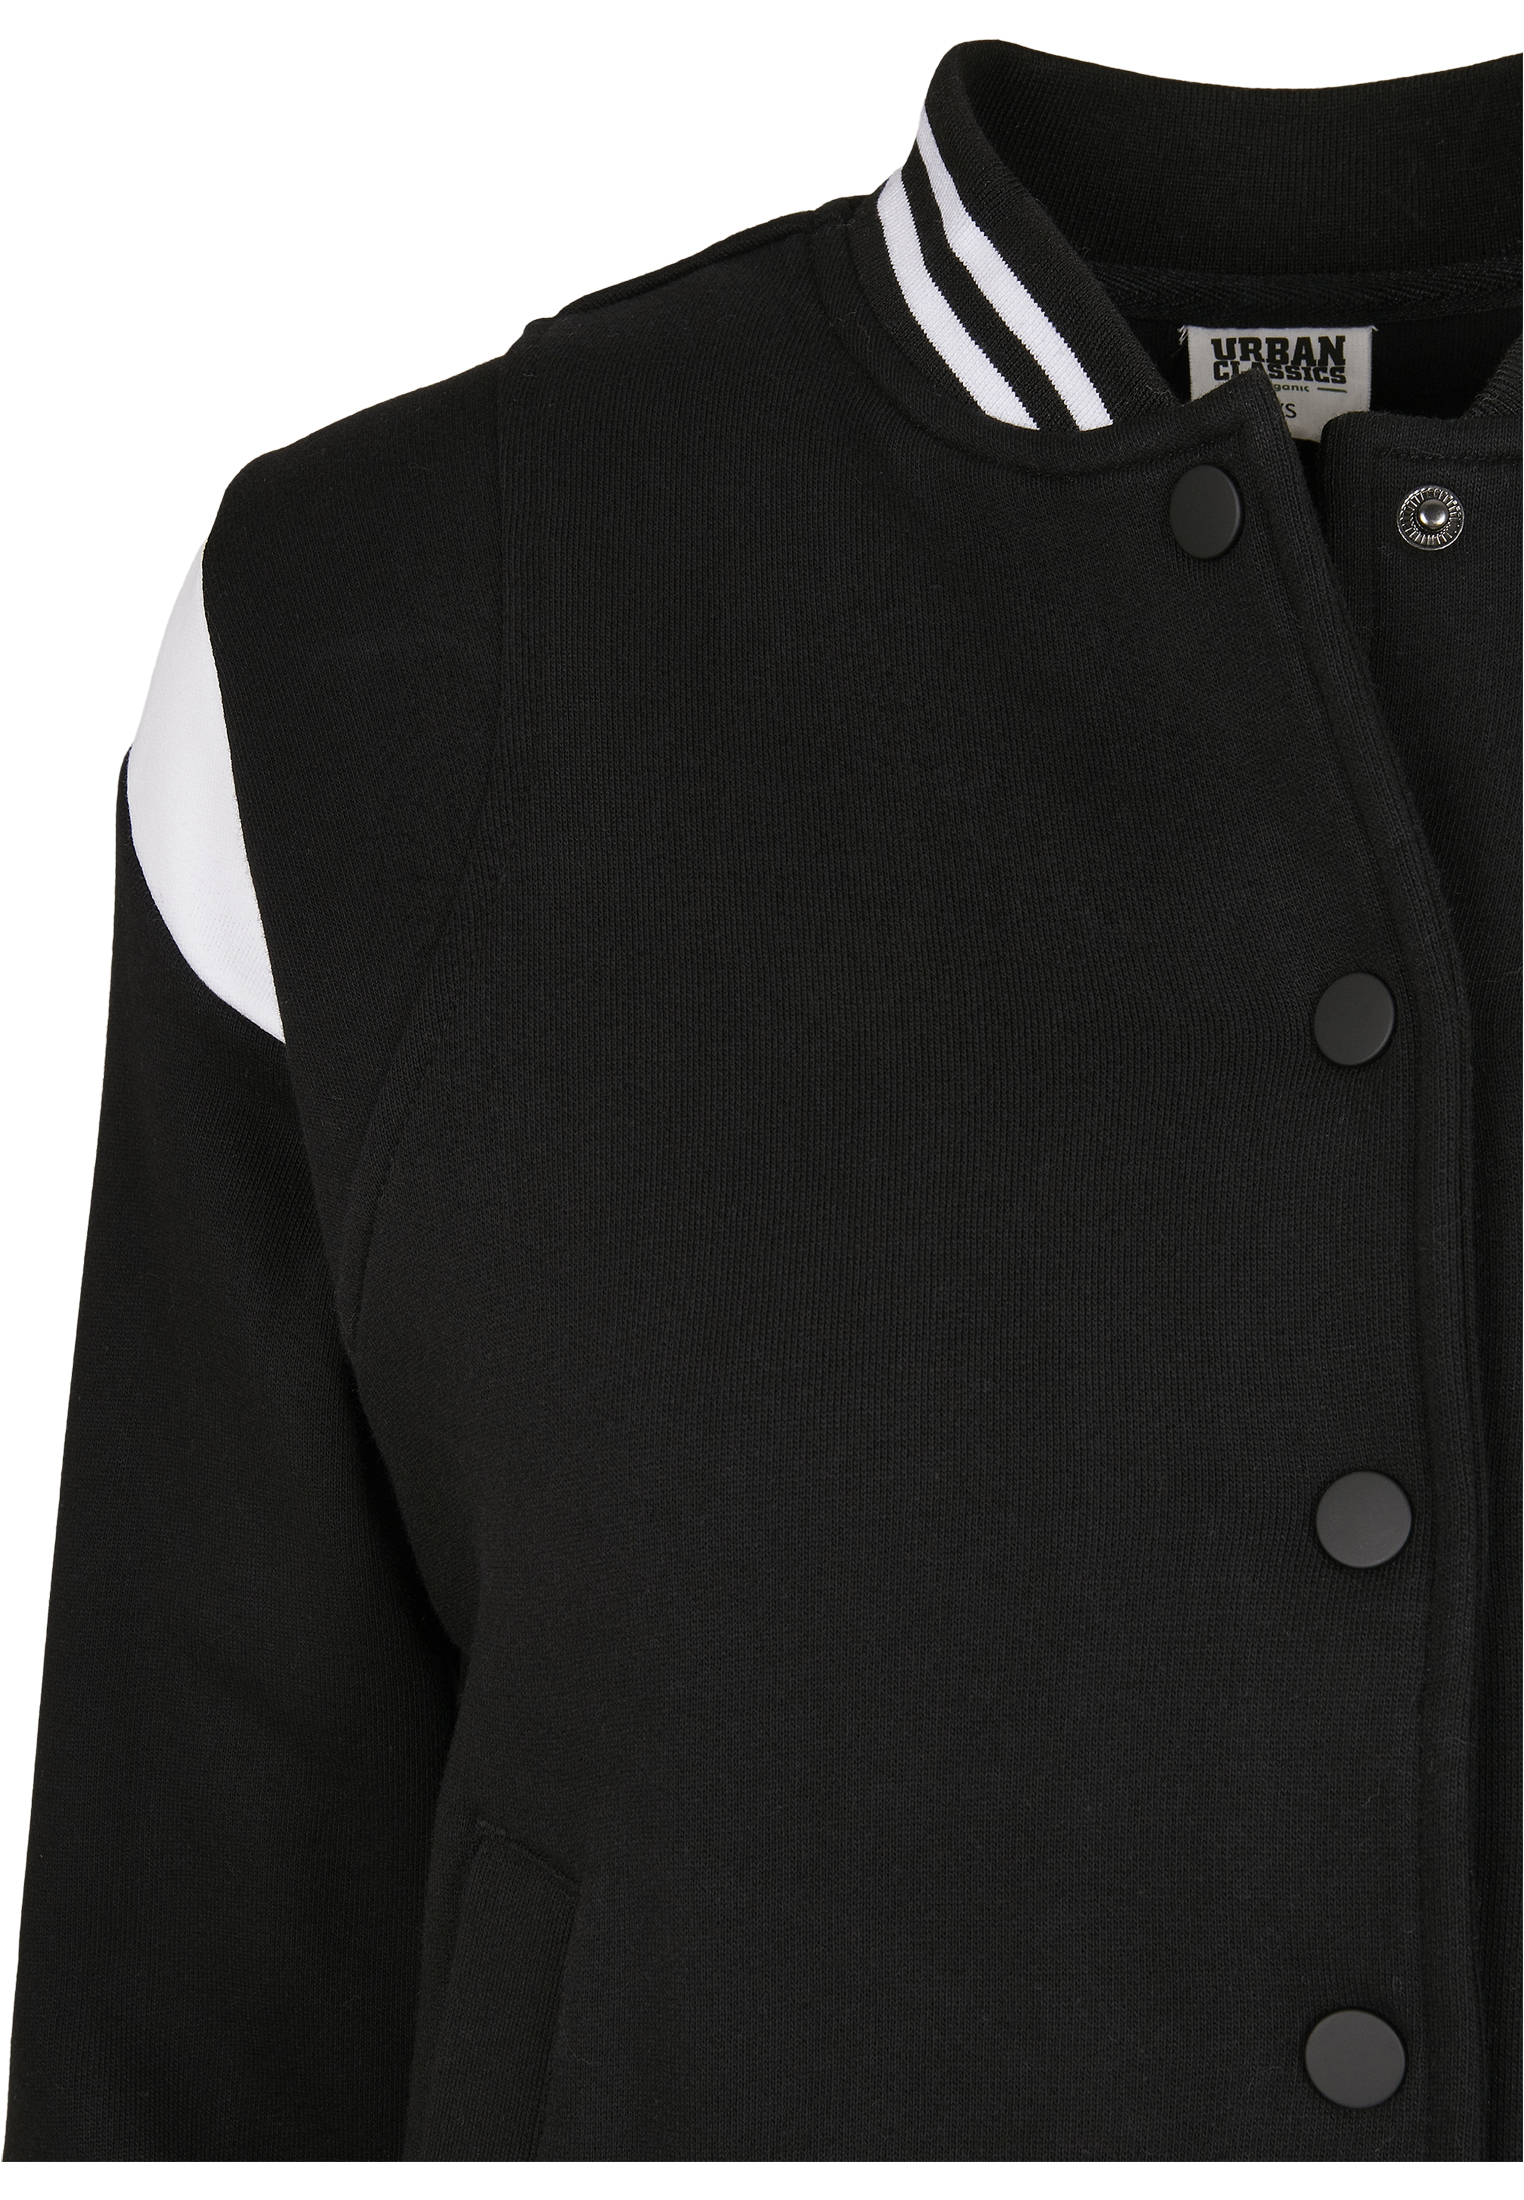 Nachhaltig Ladies Organic Inset College Sweat Jacket in Farbe black/white